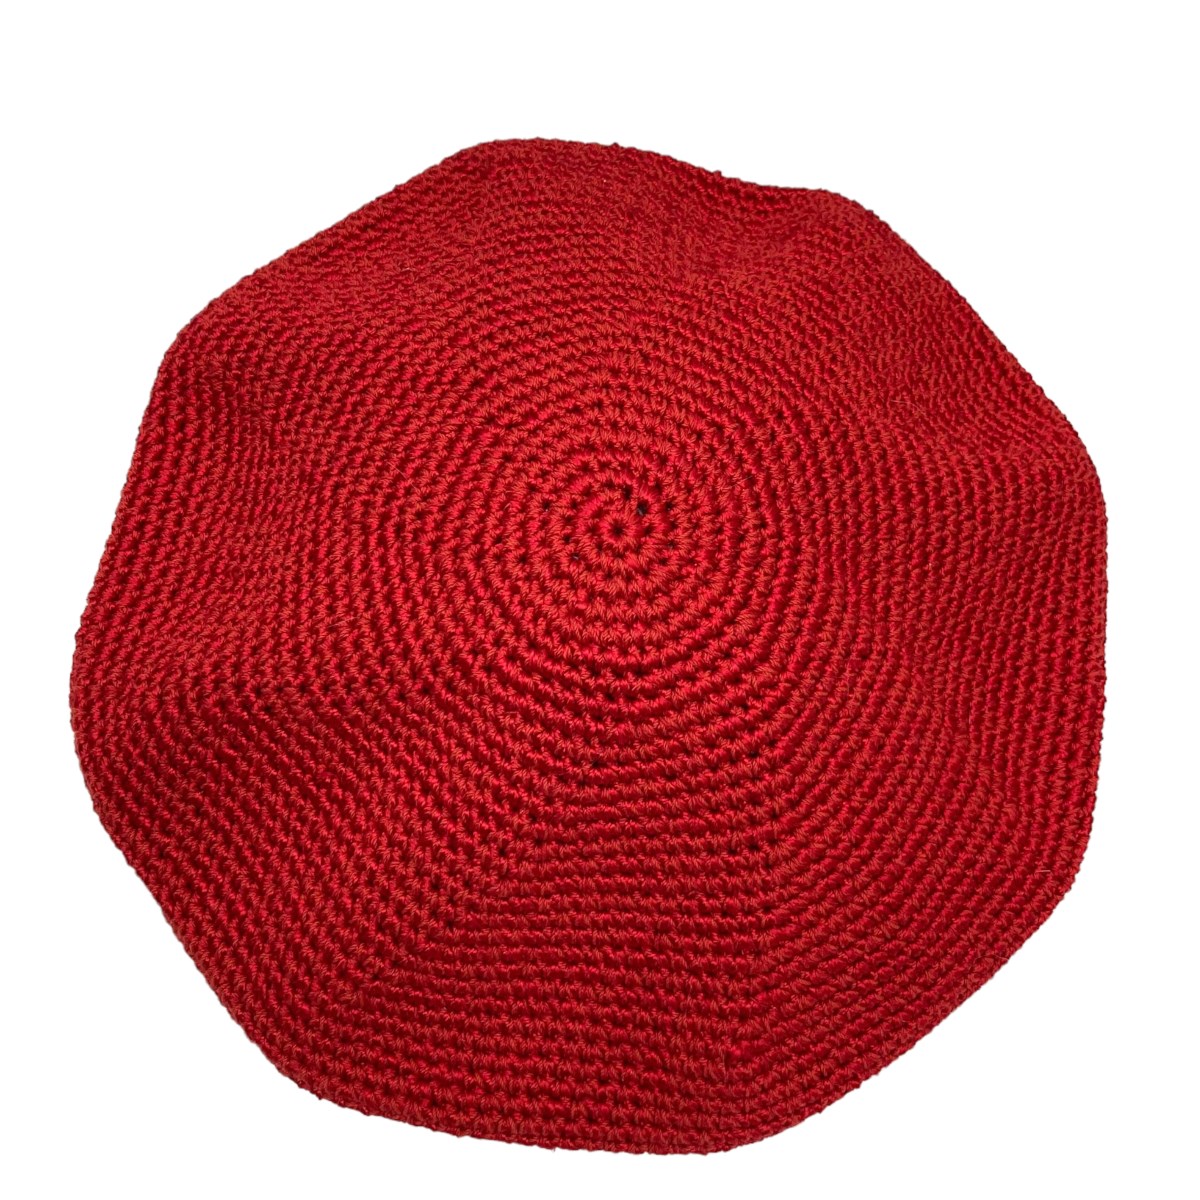 FUMIKA UCHIDAHand 海外限定 誠実 Crochet Beret レッド サイズ ベレー帽